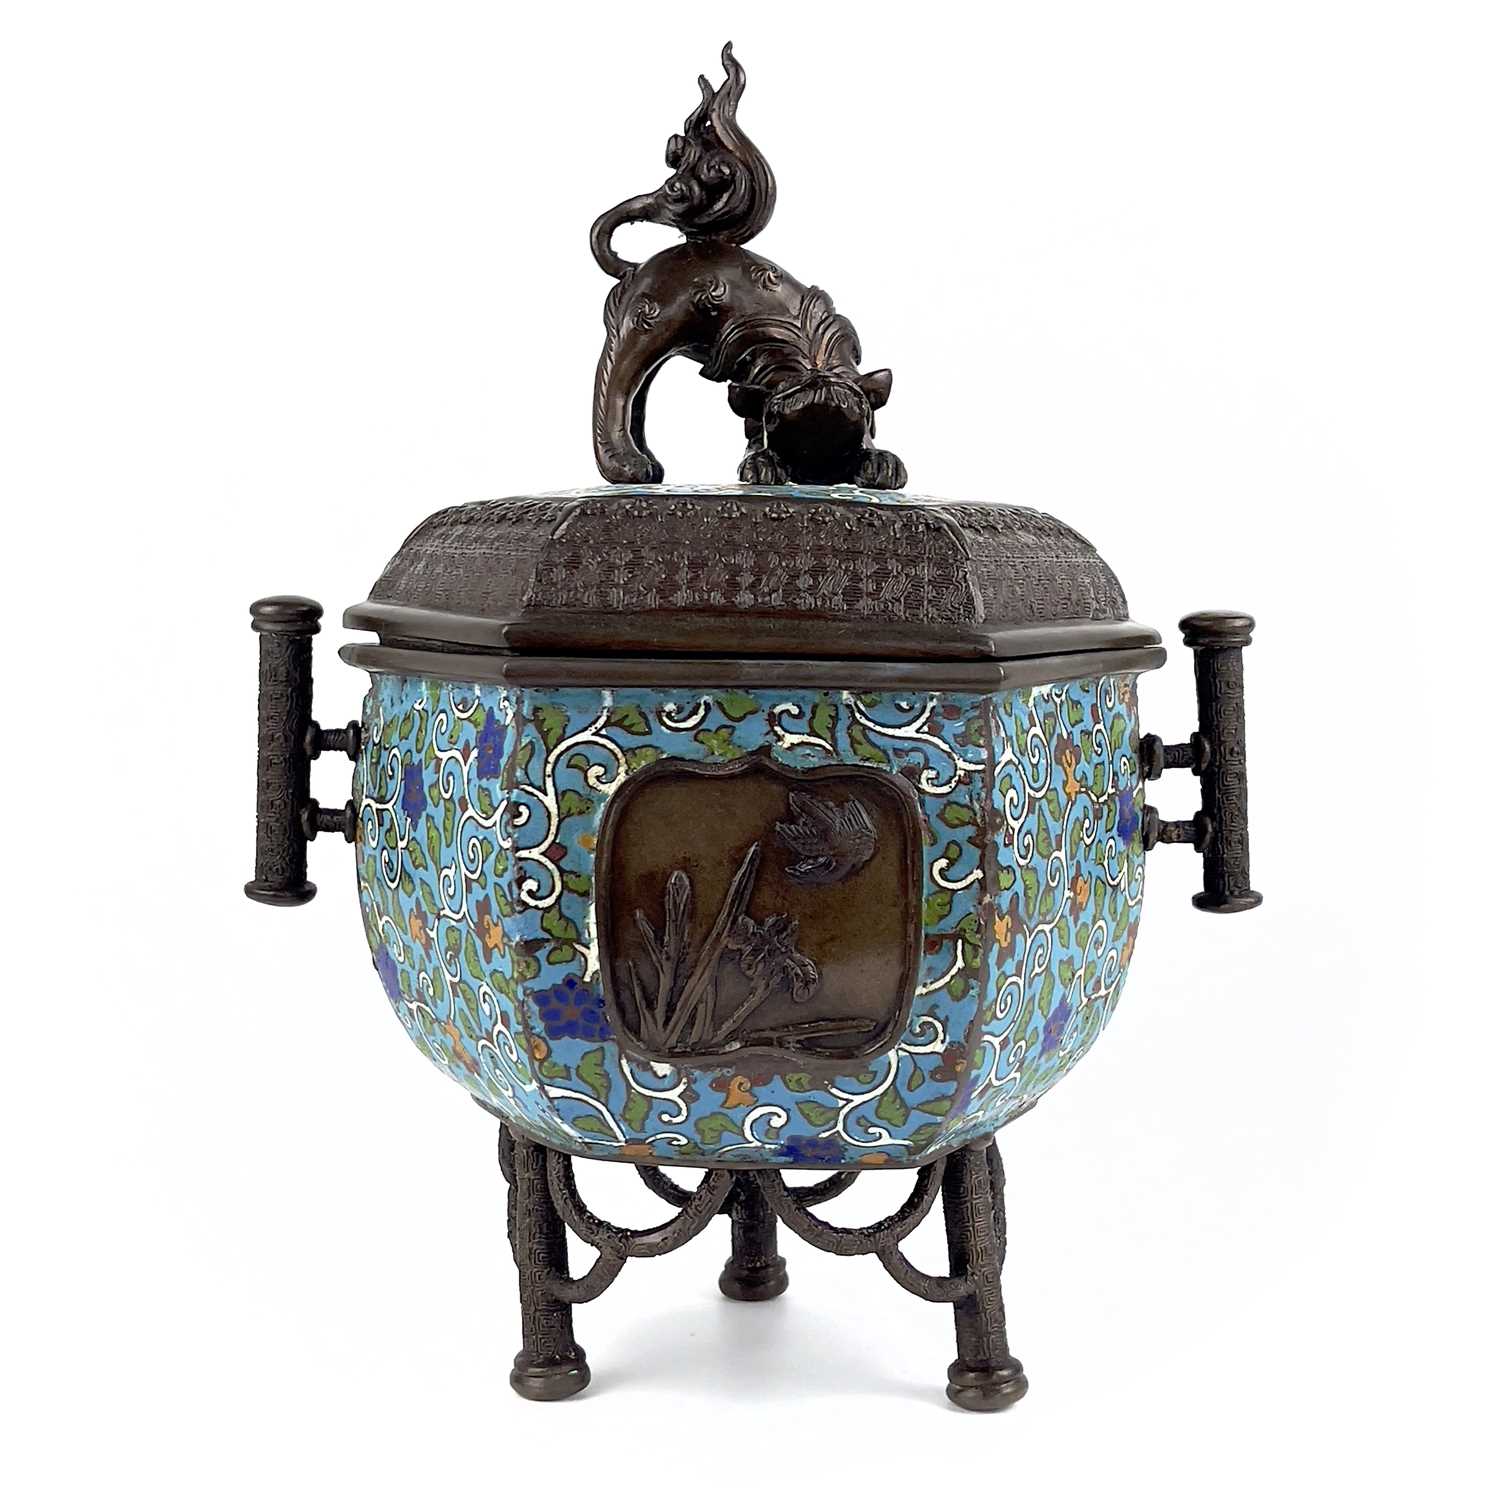 Lot 71 - A Japanese bronze and cloisonne incense burner, Meiji period.